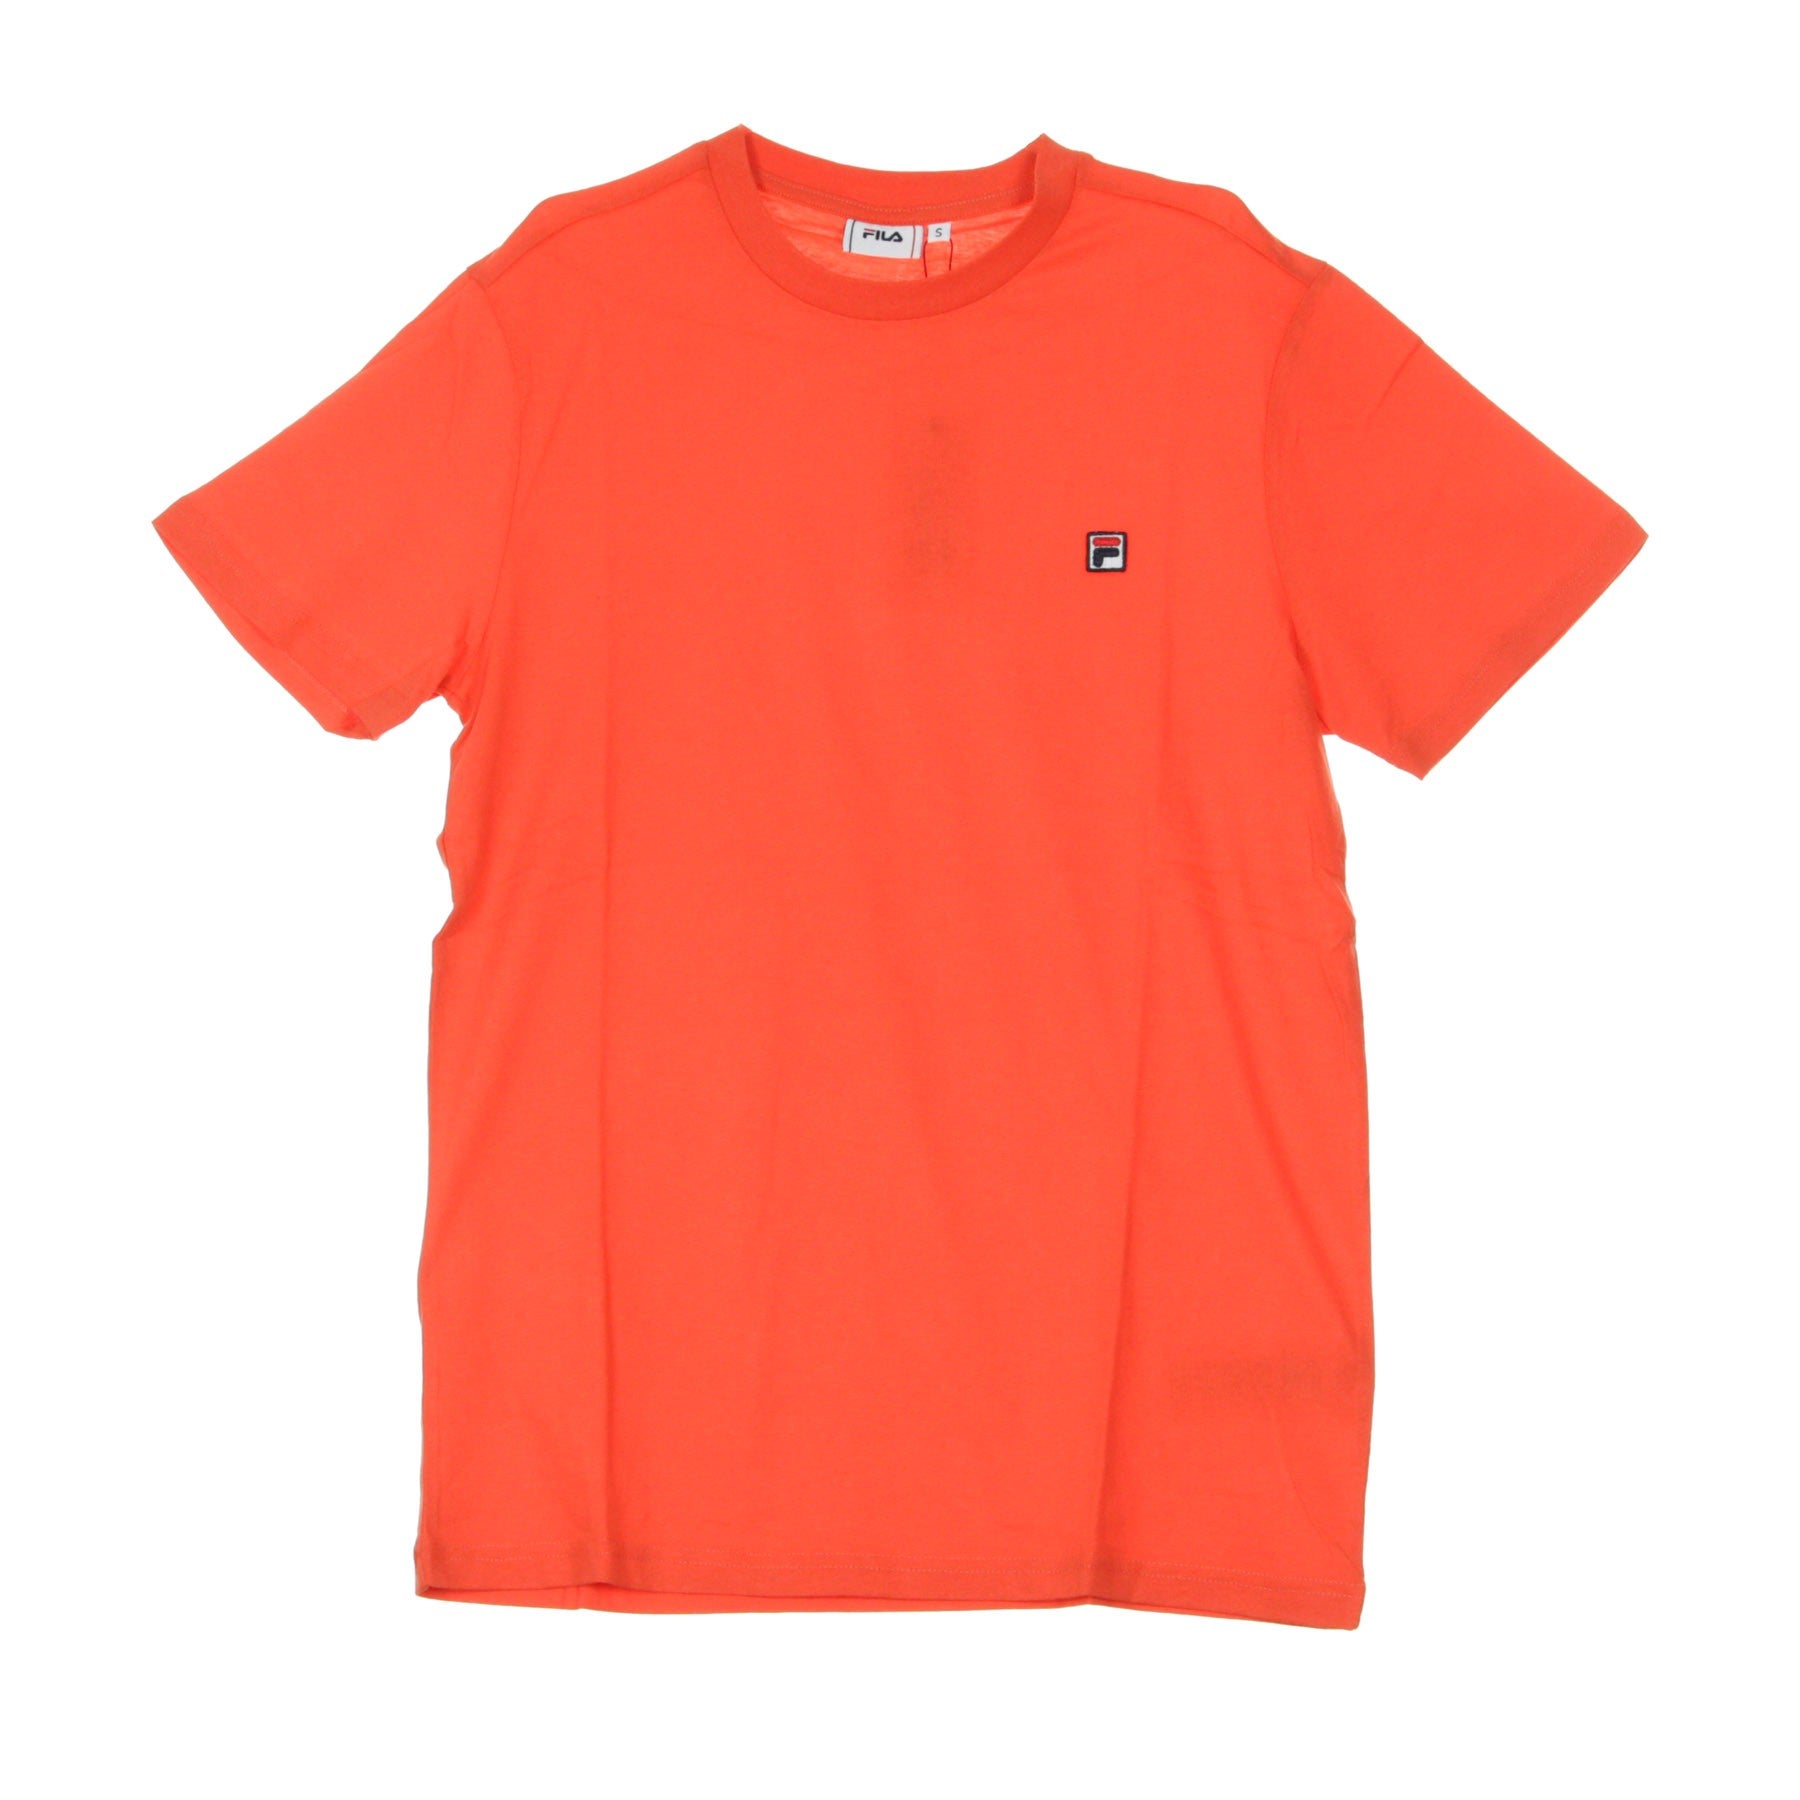 Seamus Fiesta Orange Men's T-Shirt